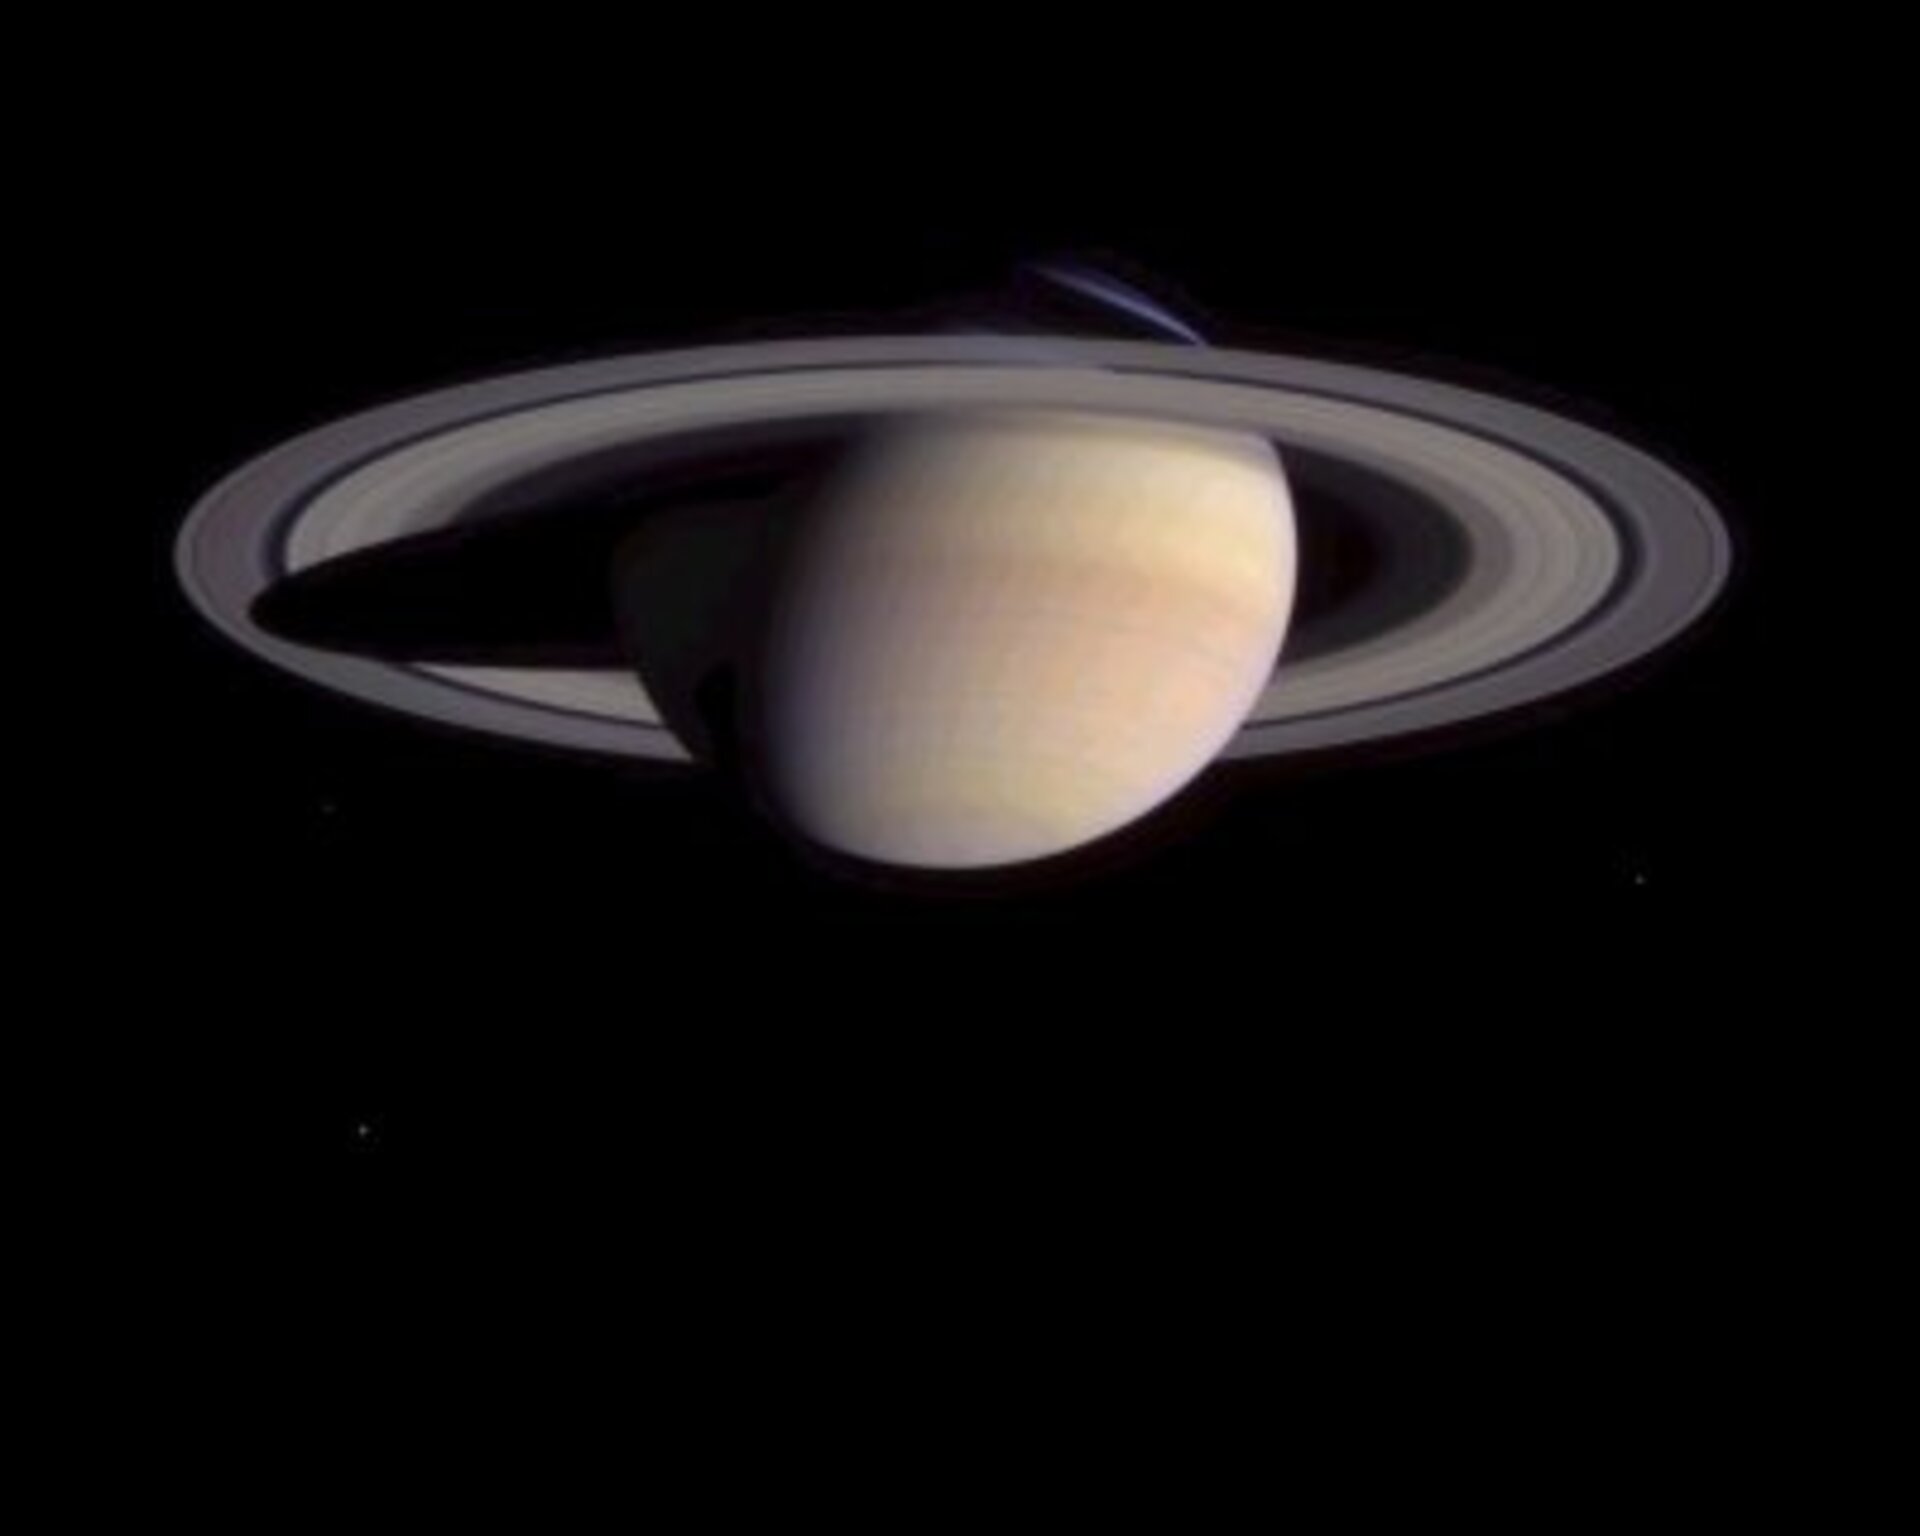 Saturn from 56 million kilometres